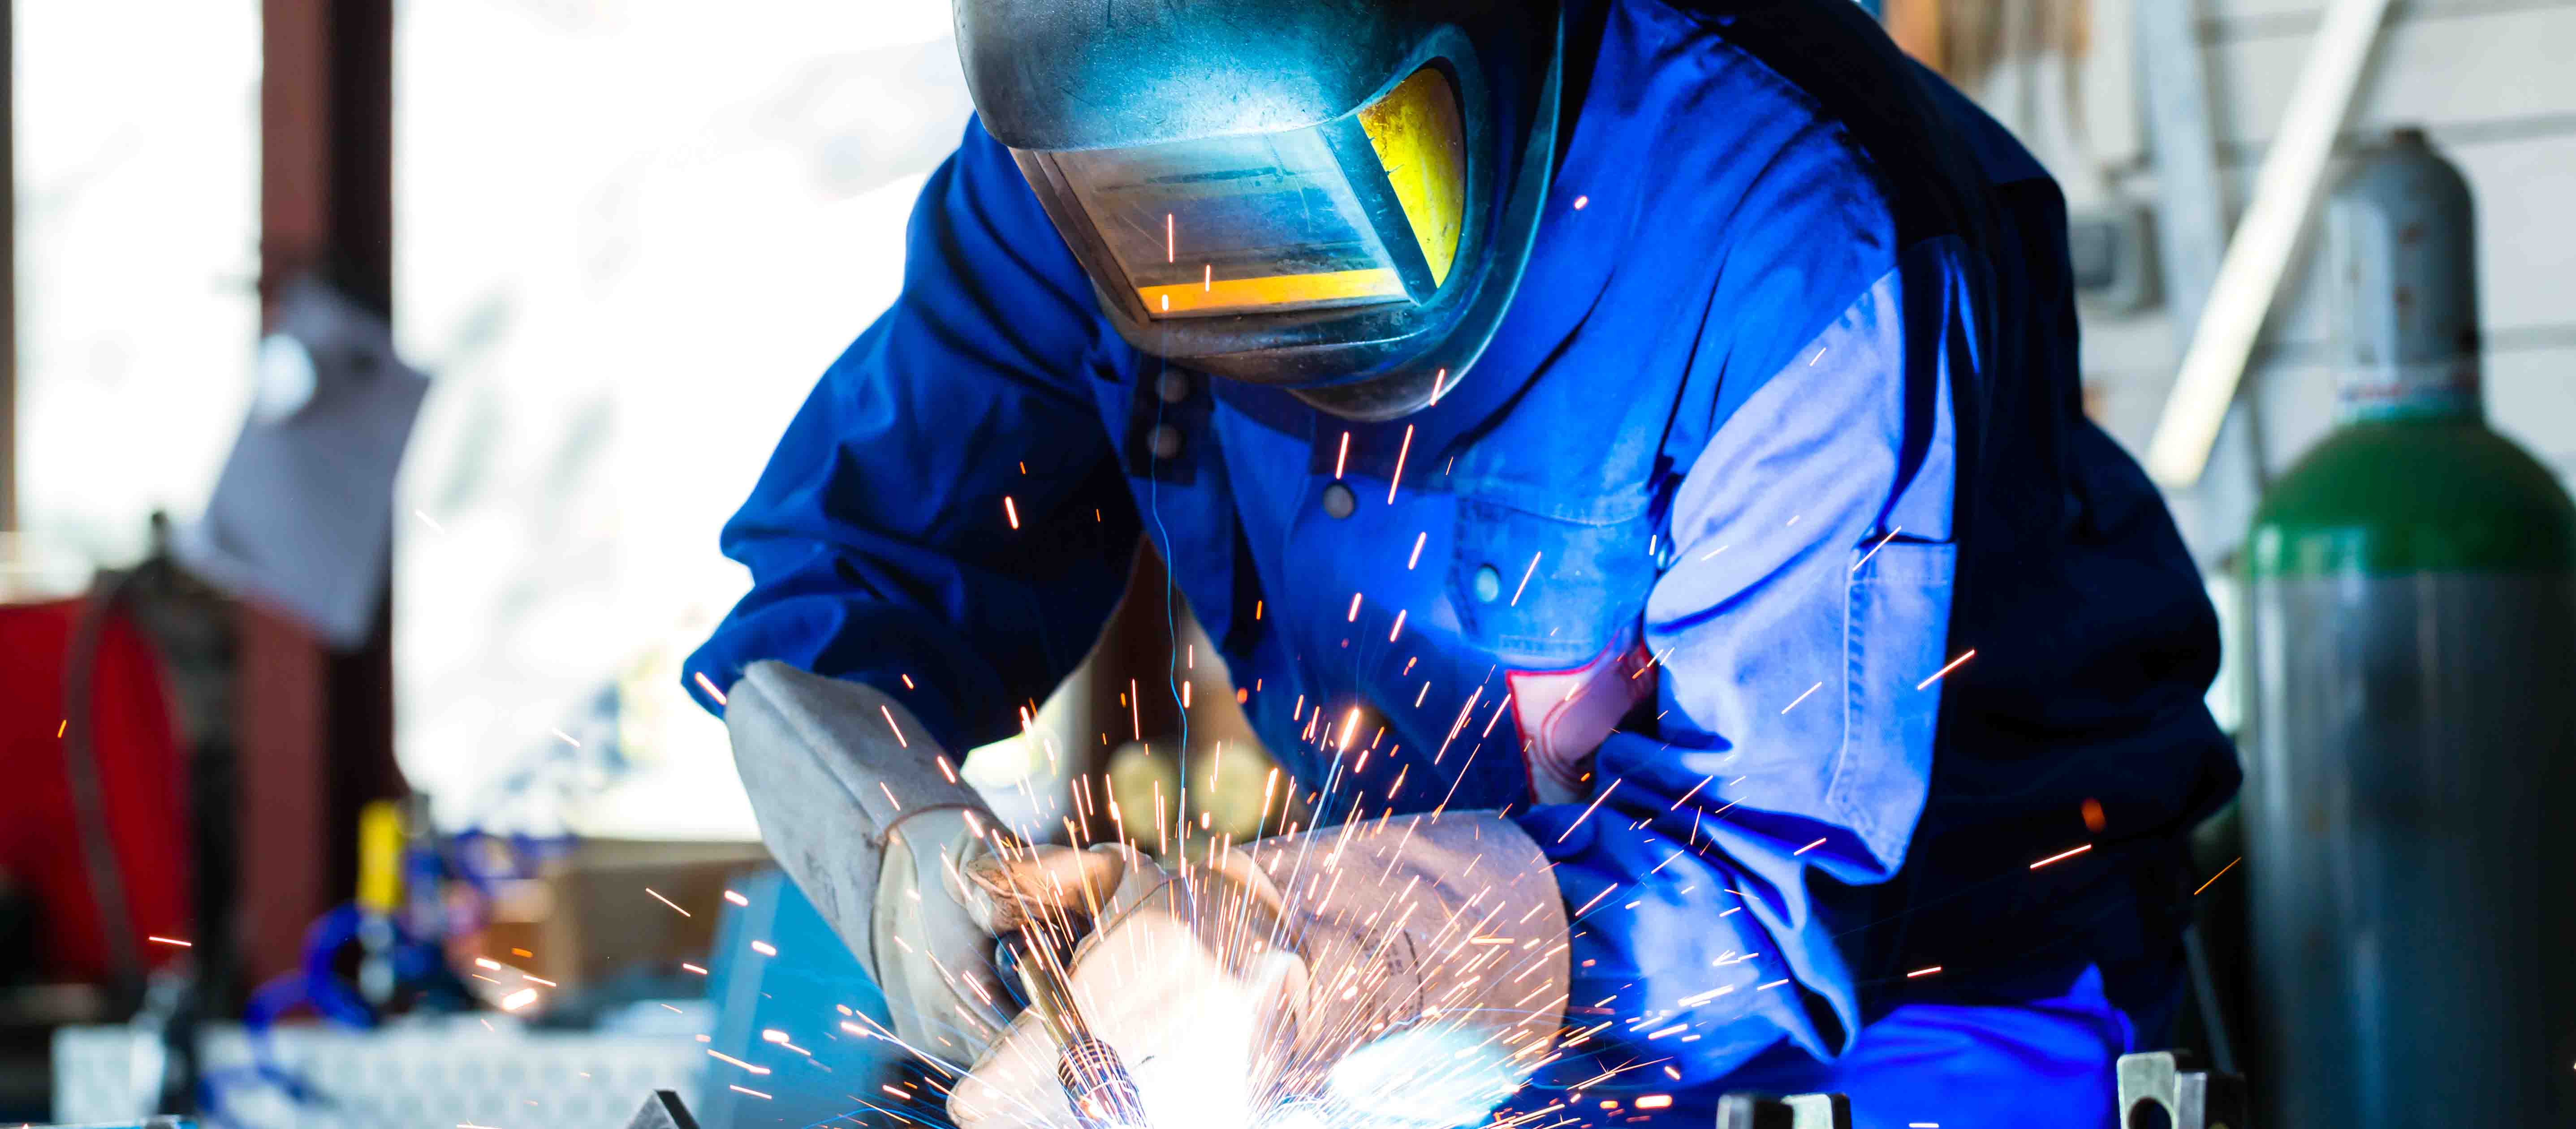 cutting welding machine training